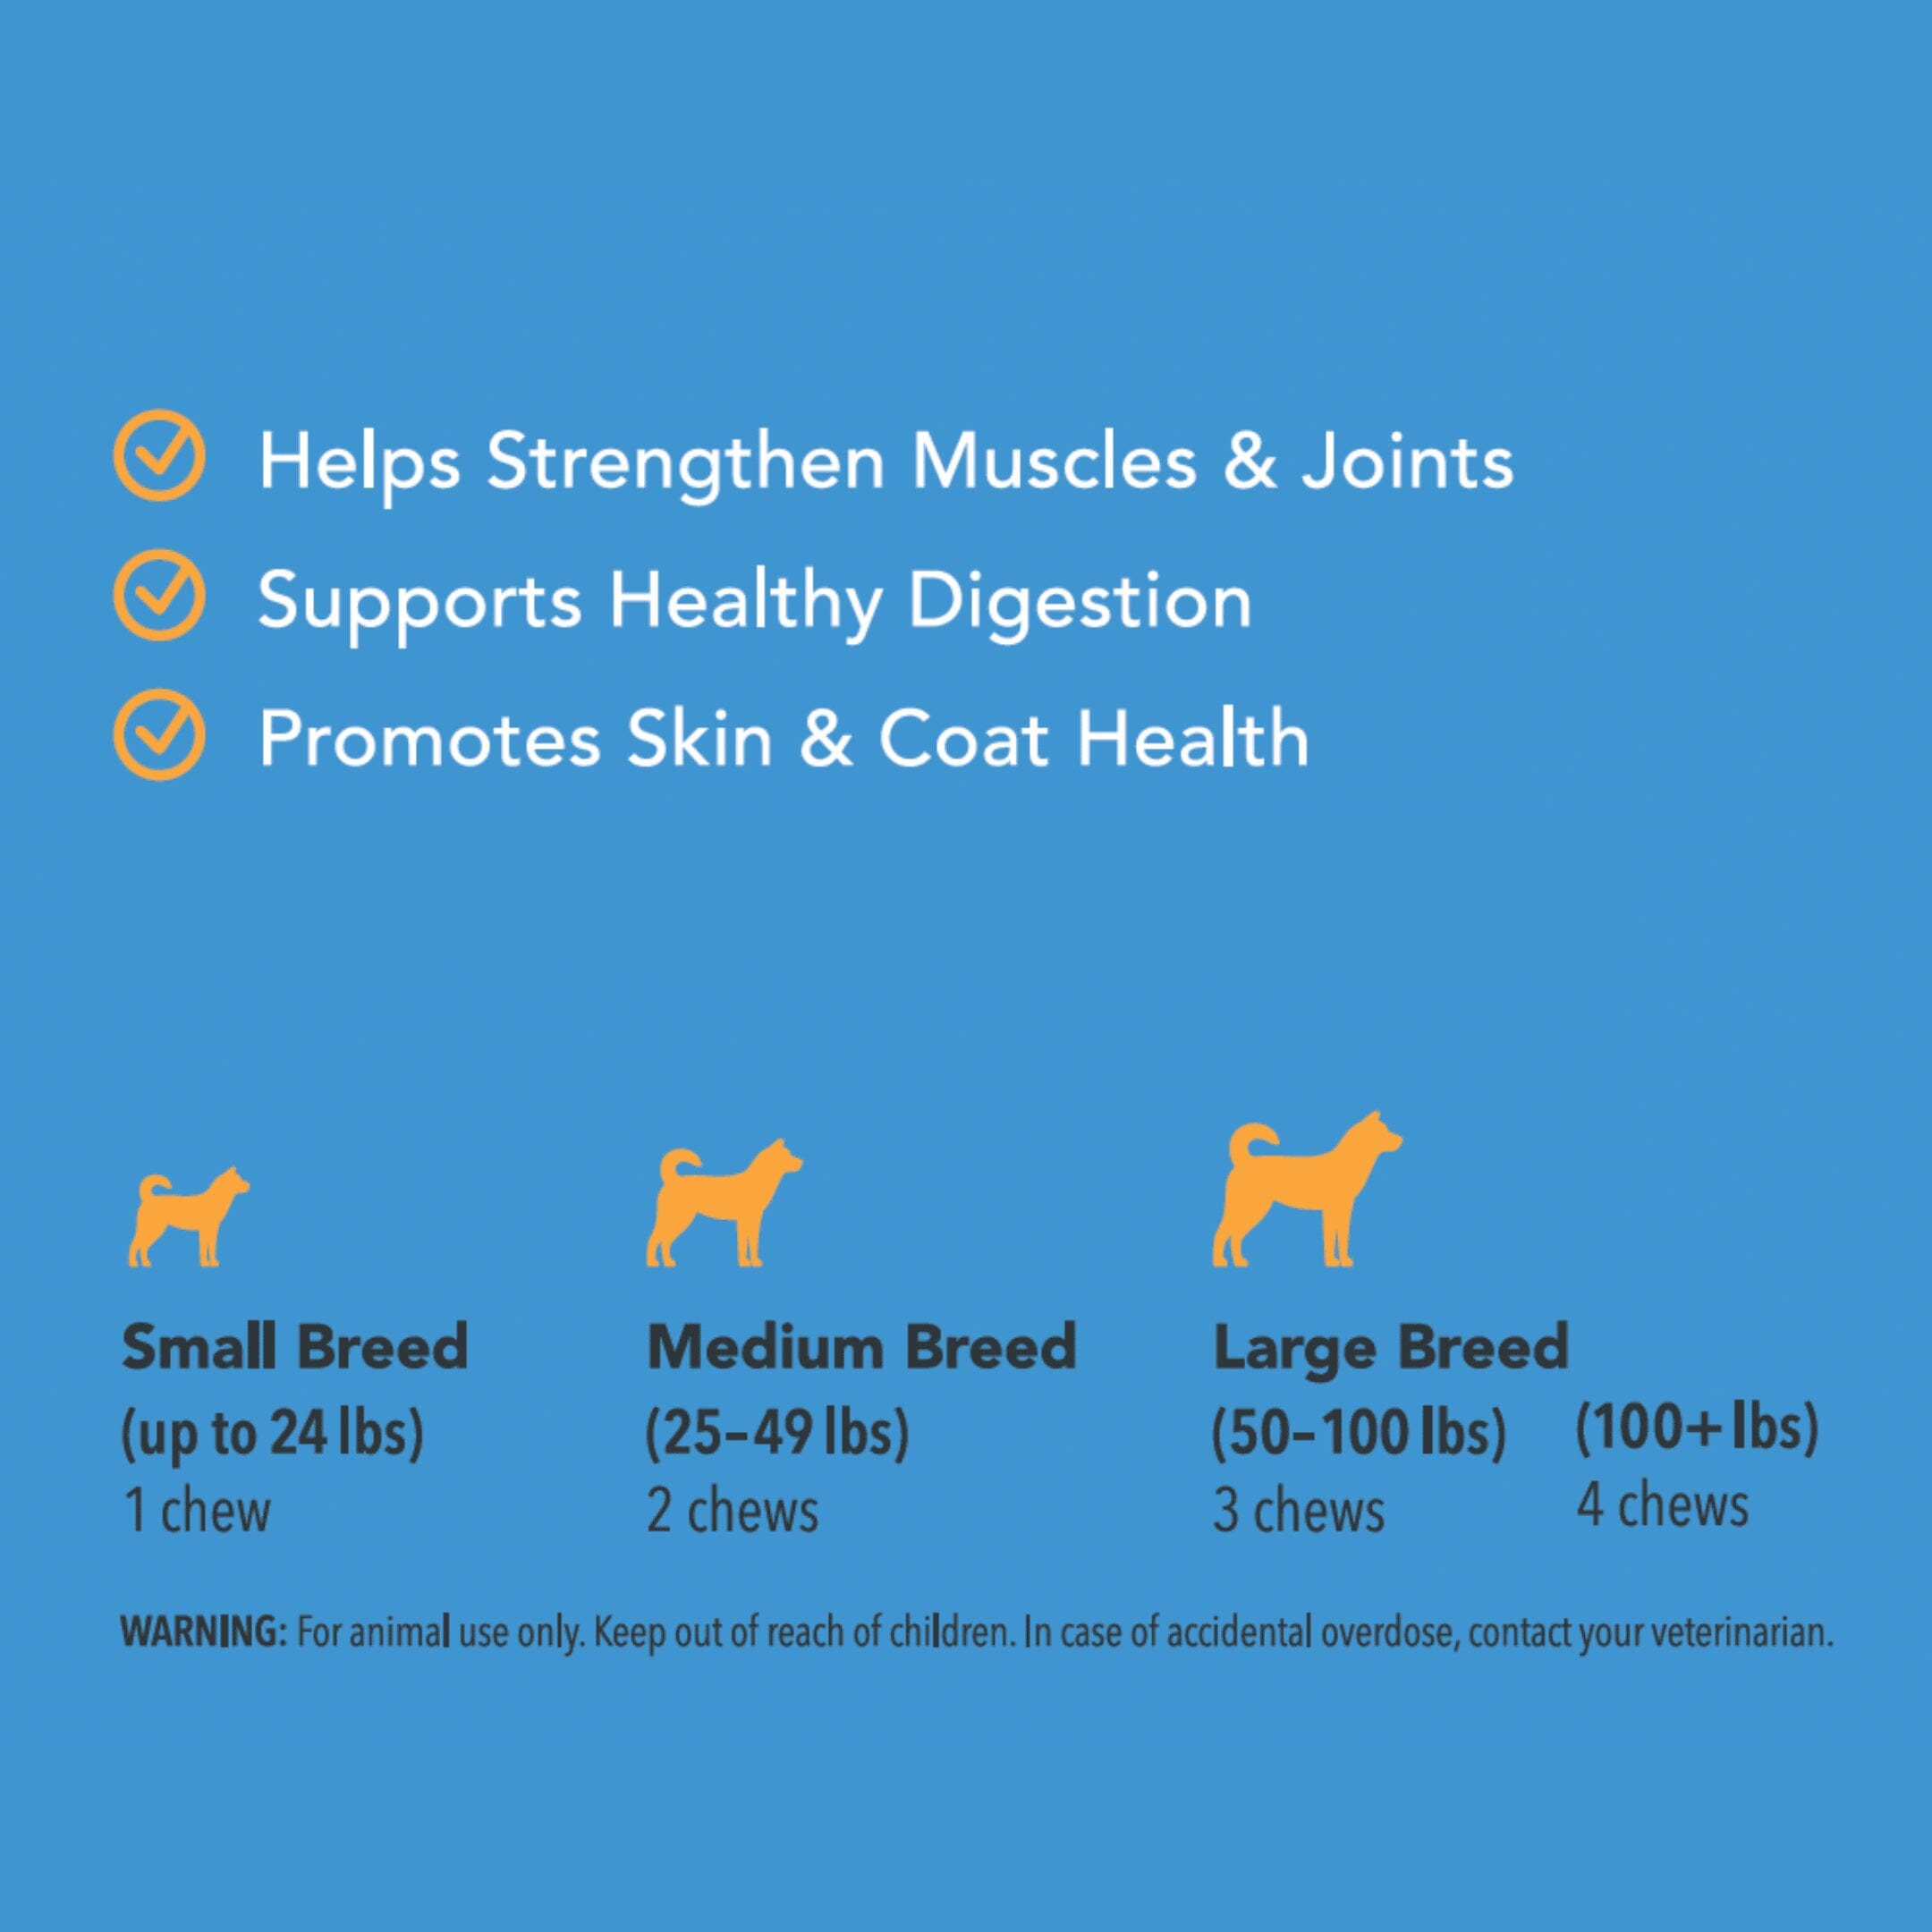 MYOS Muscle & Mobility Collagen Chew for Dogs Dog Supplements myospet.com 